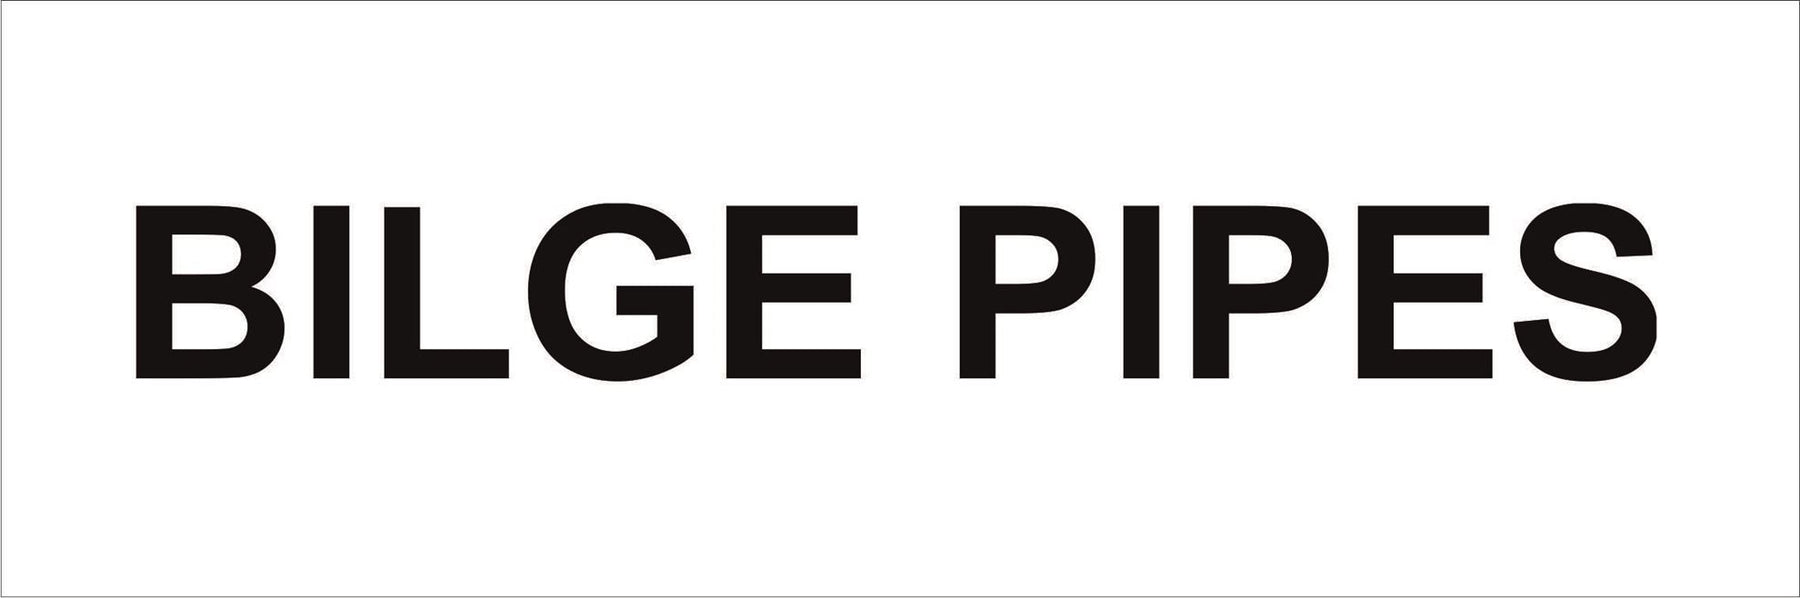 Pipeline Marking Label - BILGE PIPES